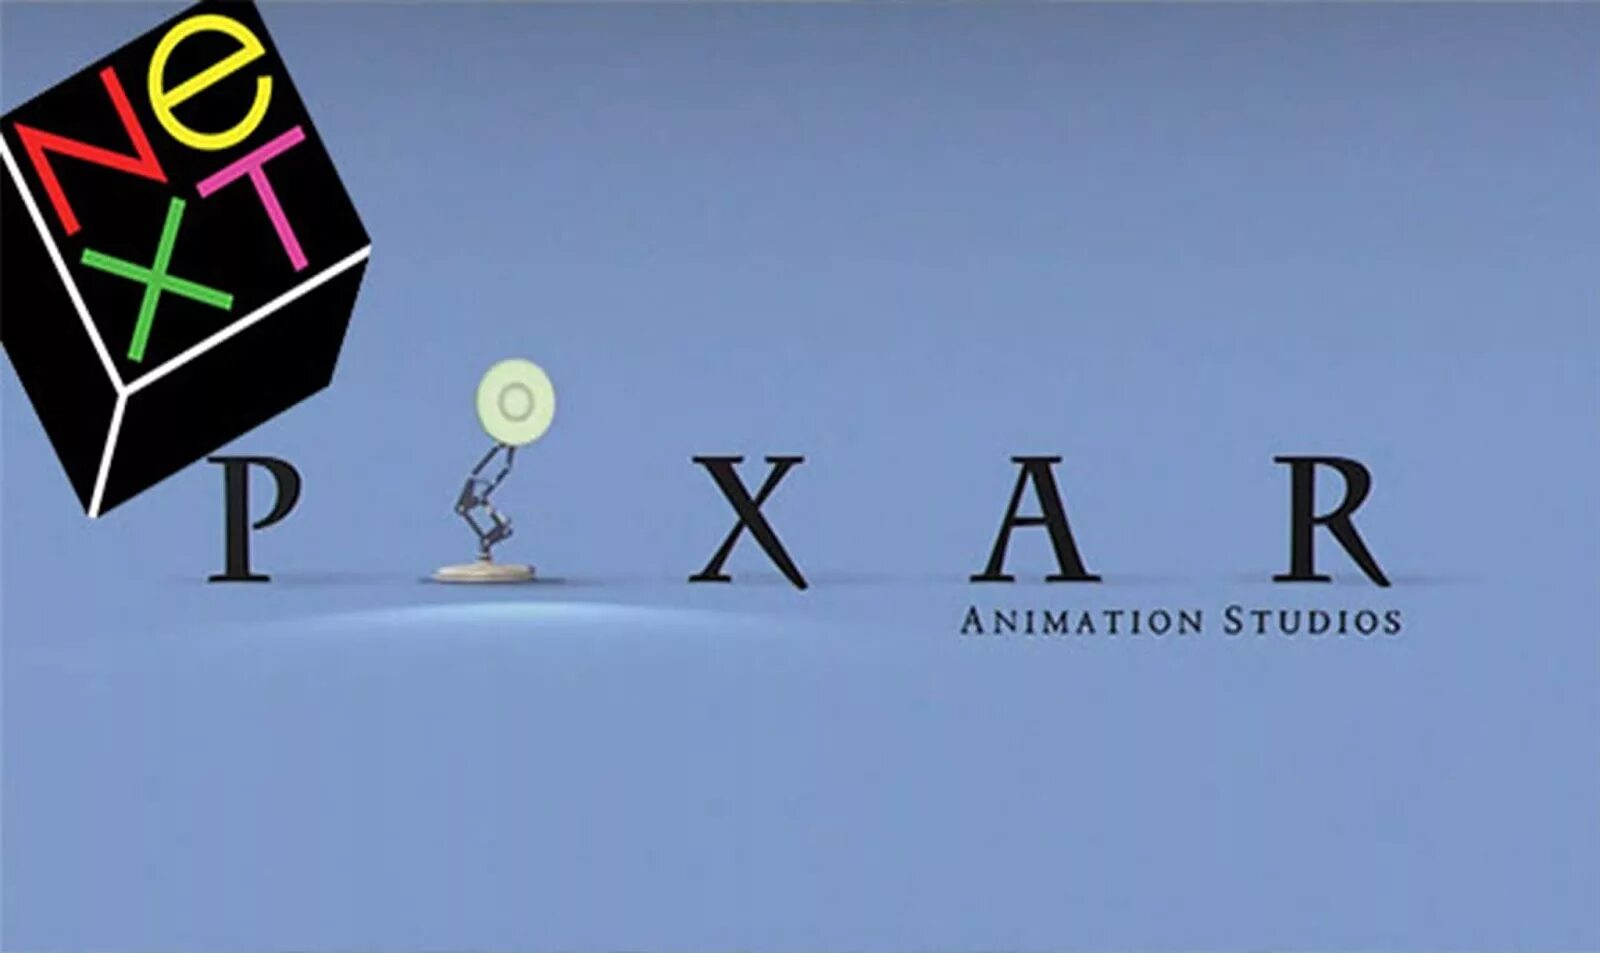 Пиксар премиум. Стив Джобс и компания «Pixar». Компания Pixar Стива Джобса. Логотип next Стив Джобс. Студия Пиксар Стив Джобс.